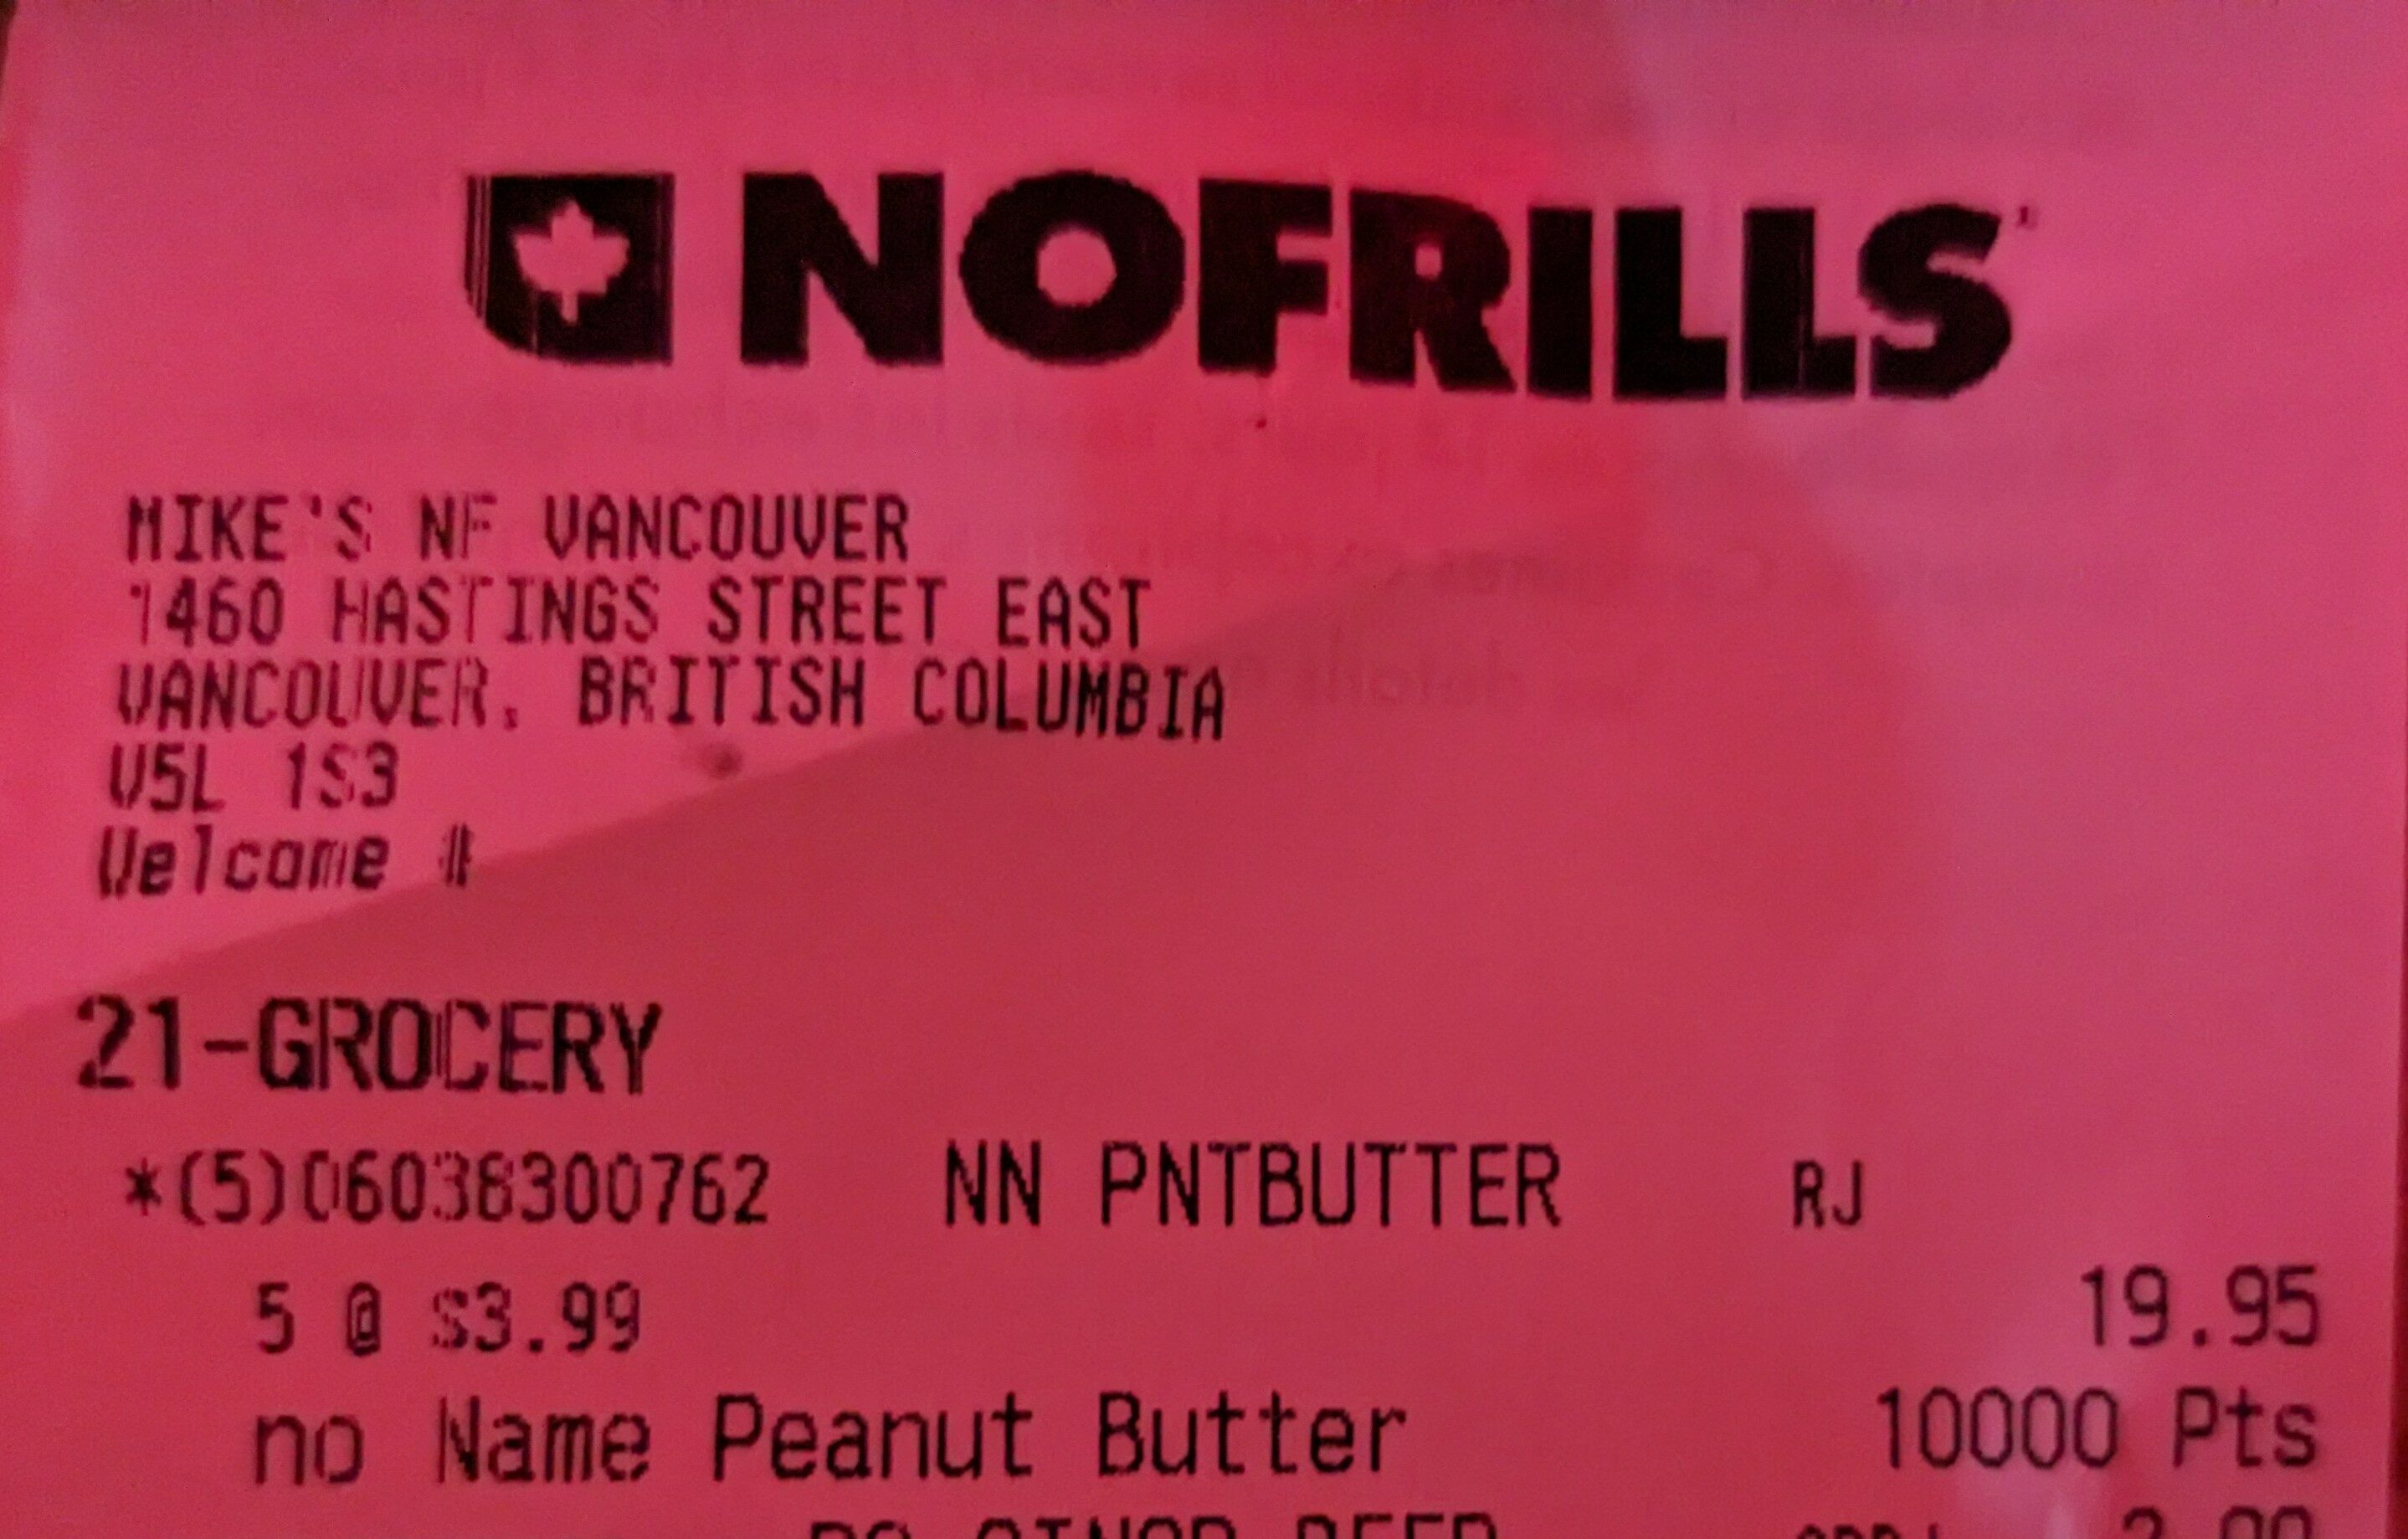 Real Canadian Superstore] Peanut Butter M&Ms (1KG) - $4.54 (Edmonton, YMMV)  - RedFlagDeals.com Forums